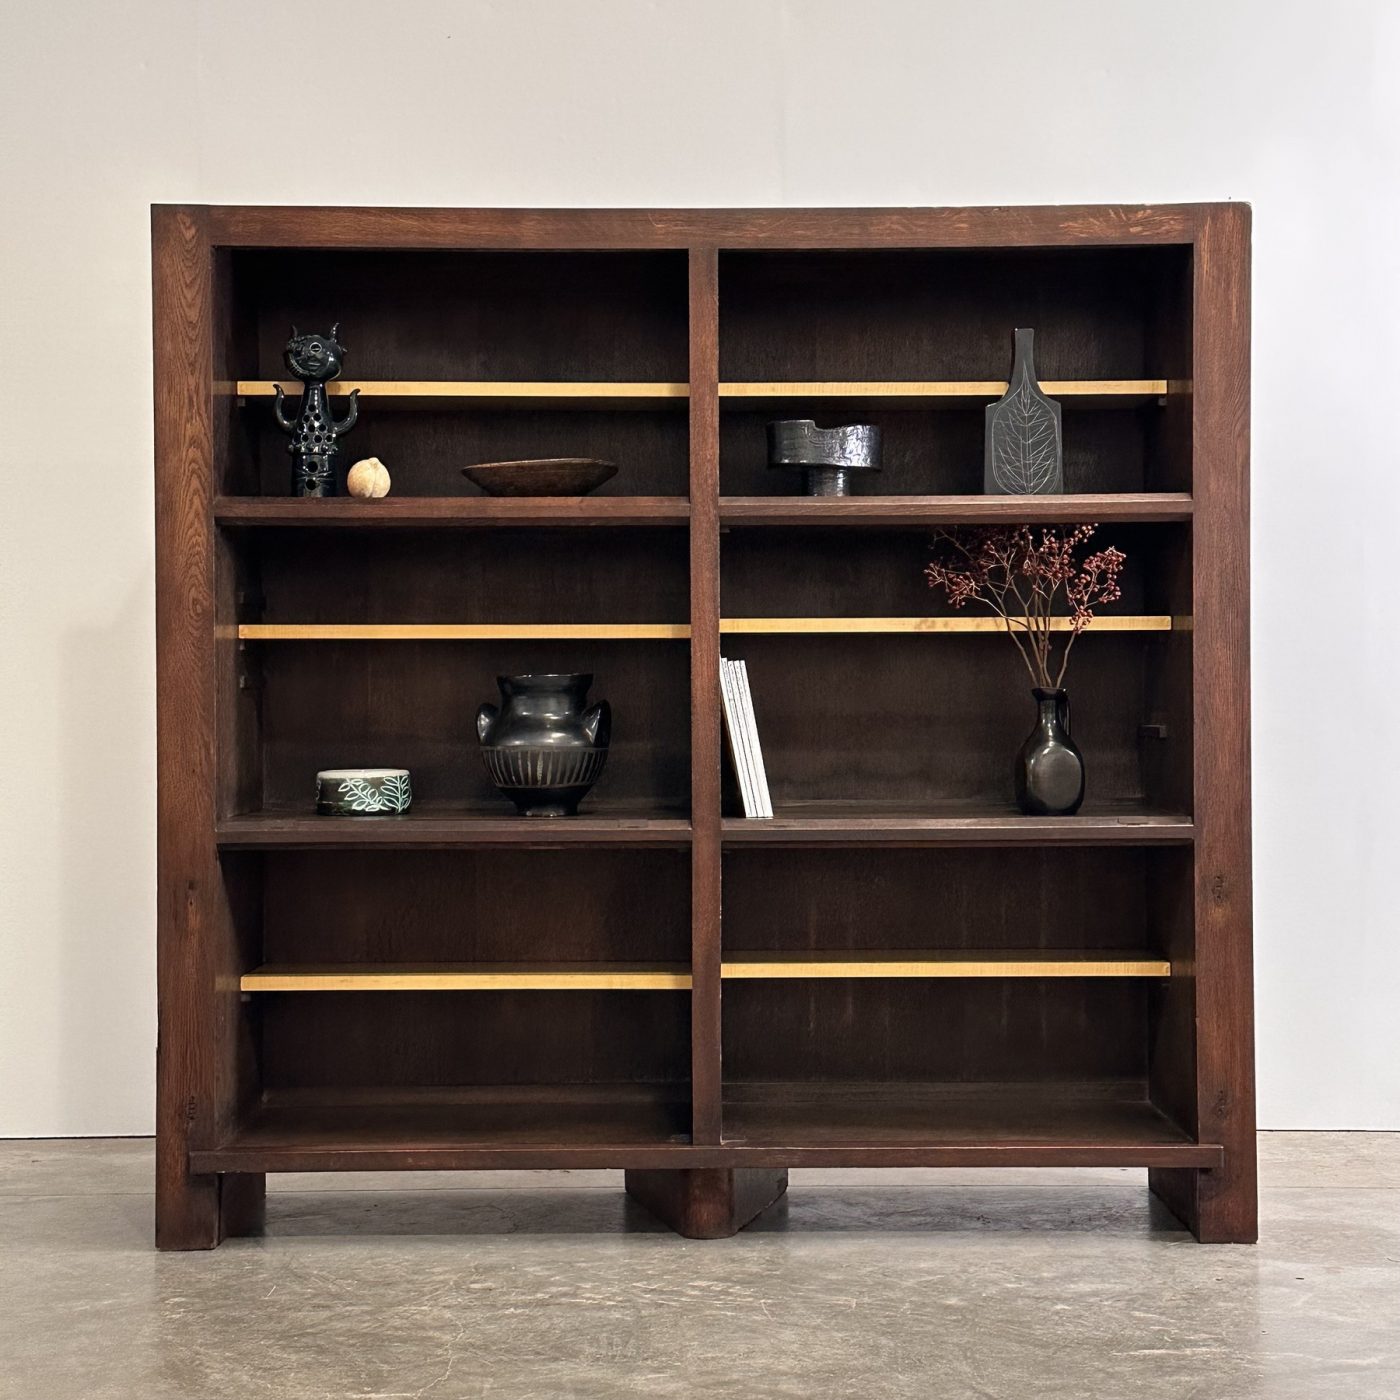 objet-vagabond-midcentury-cabinet0002